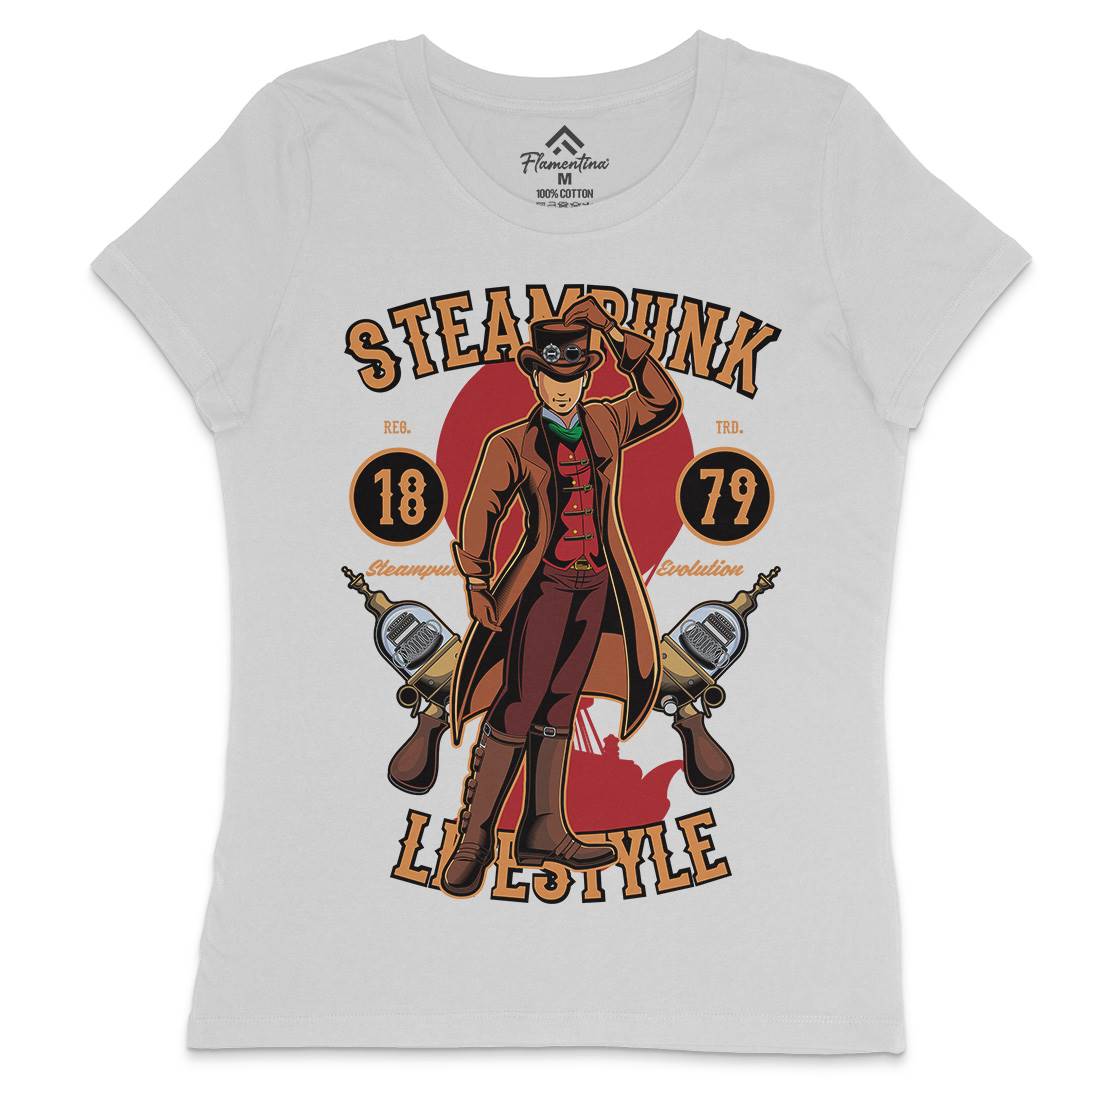 Lifestyle Womens Crew Neck T-Shirt Steampunk C450